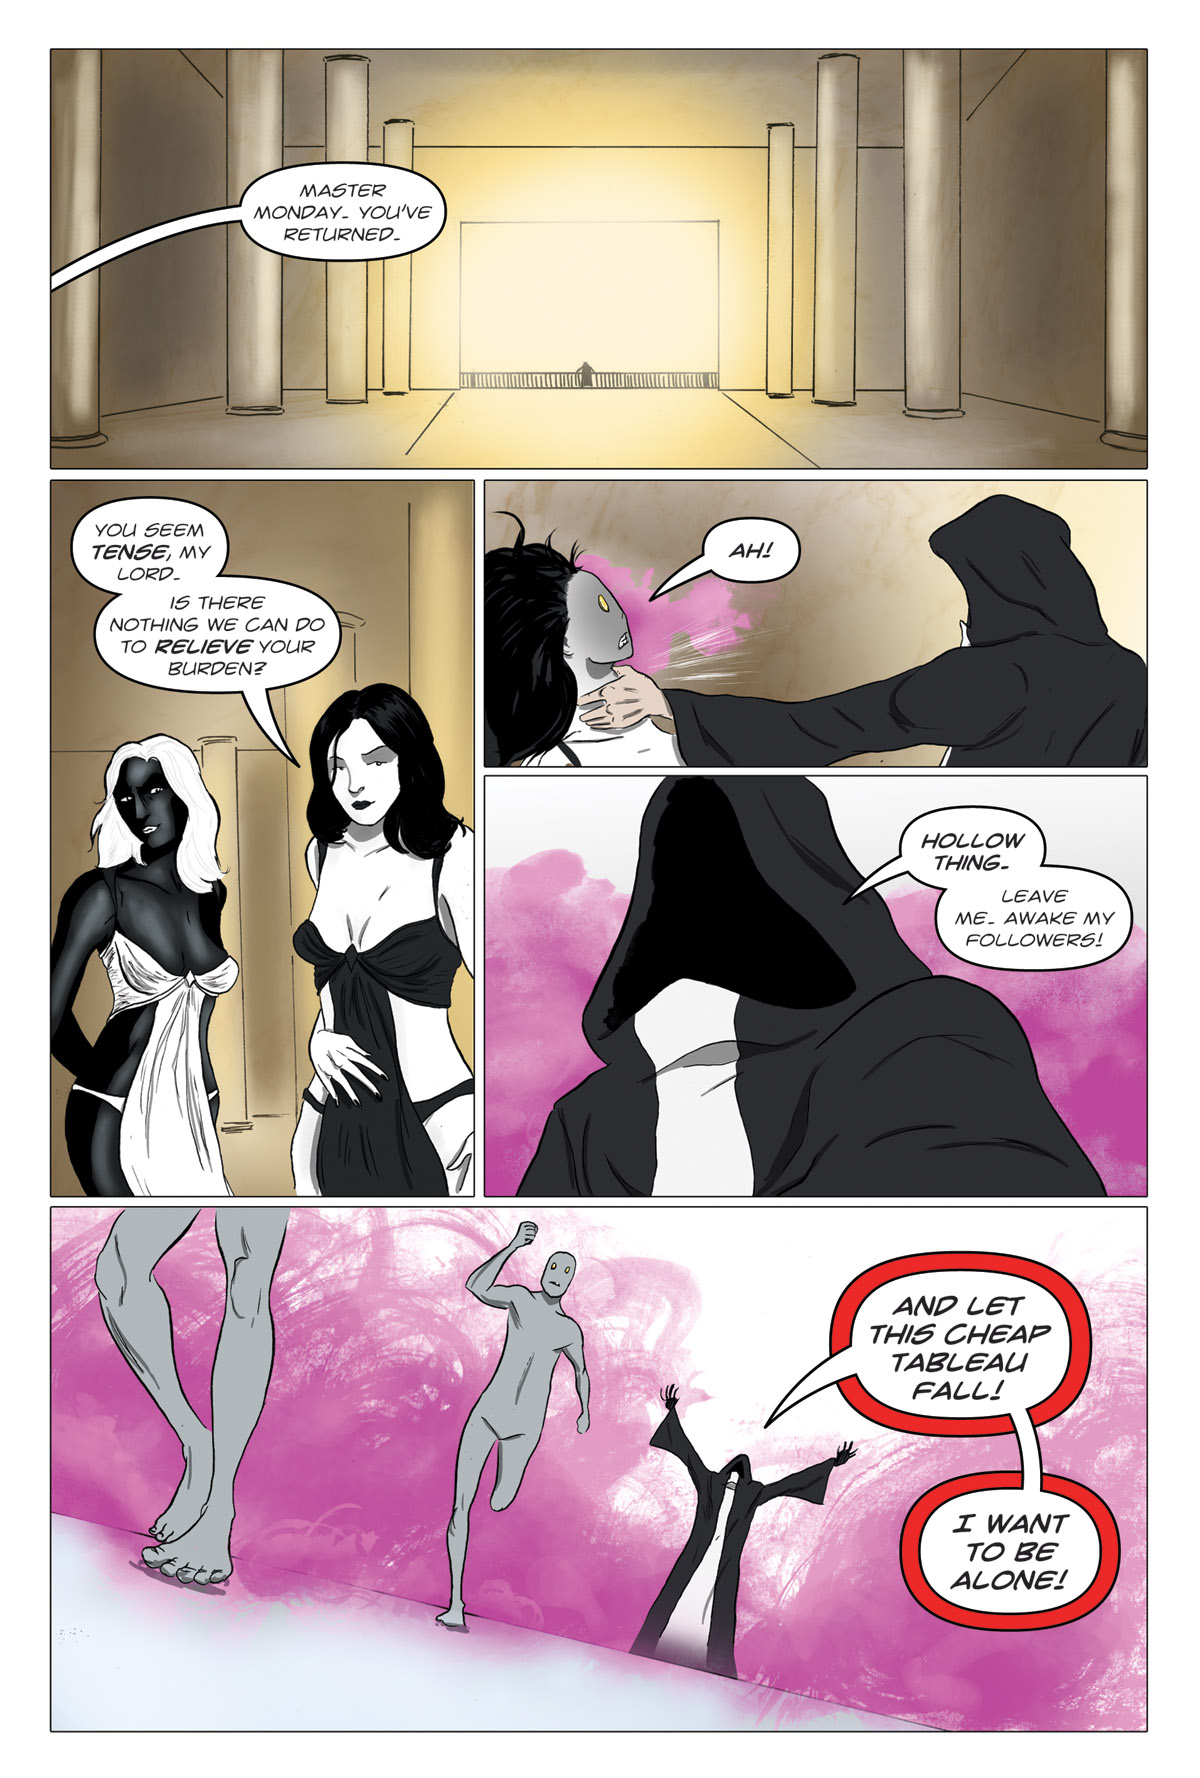 Afterlife Inc. | Genesis | Page 7